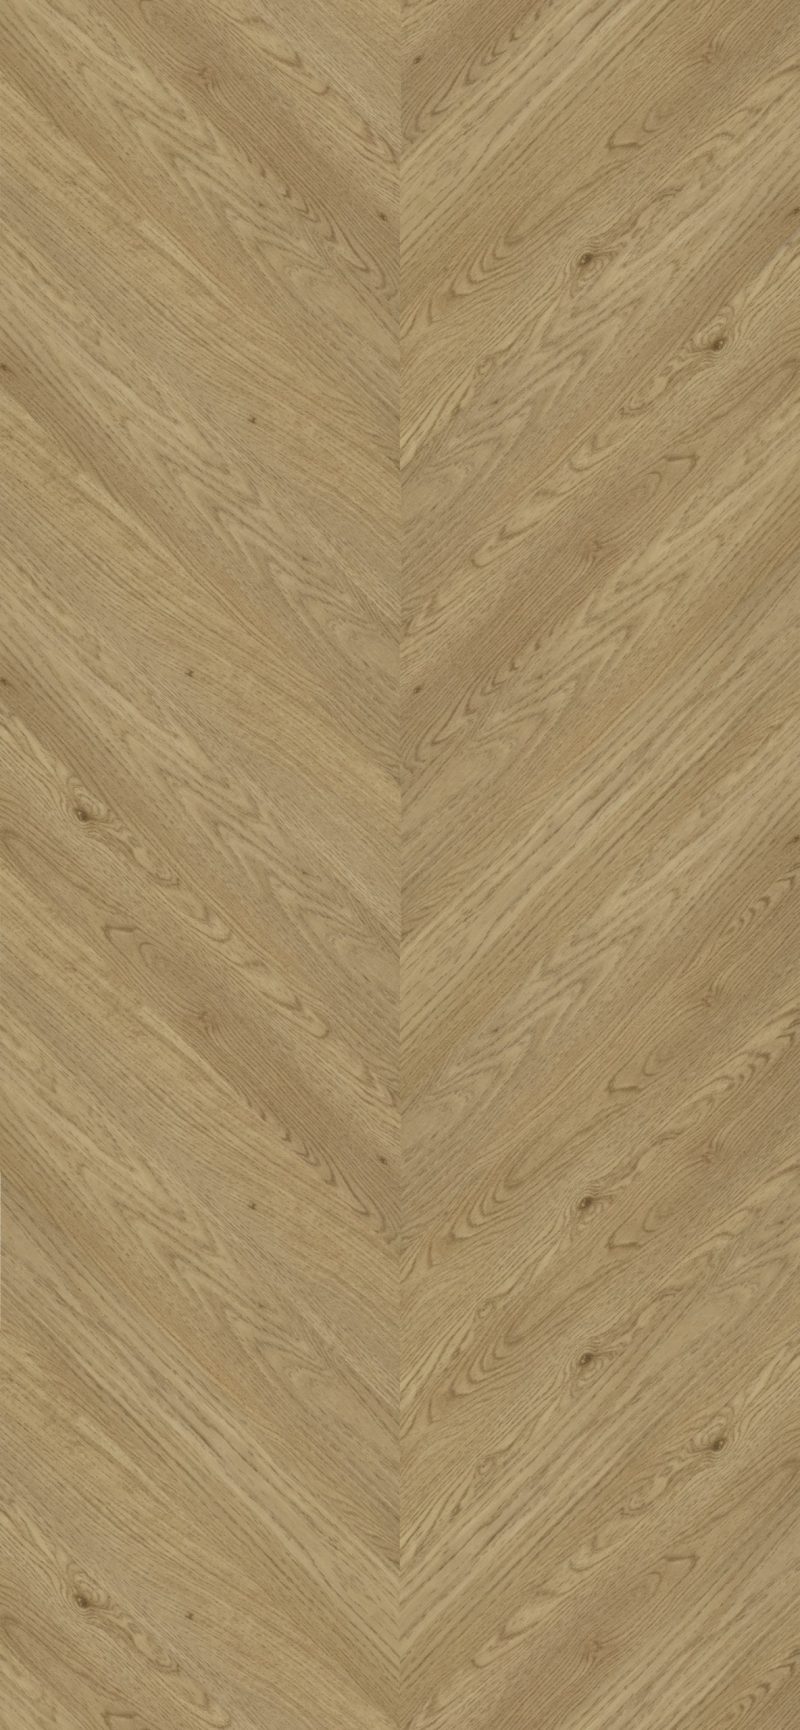 Vinilinės grindys lentelėmis Forbo Allura Wood waxed oak